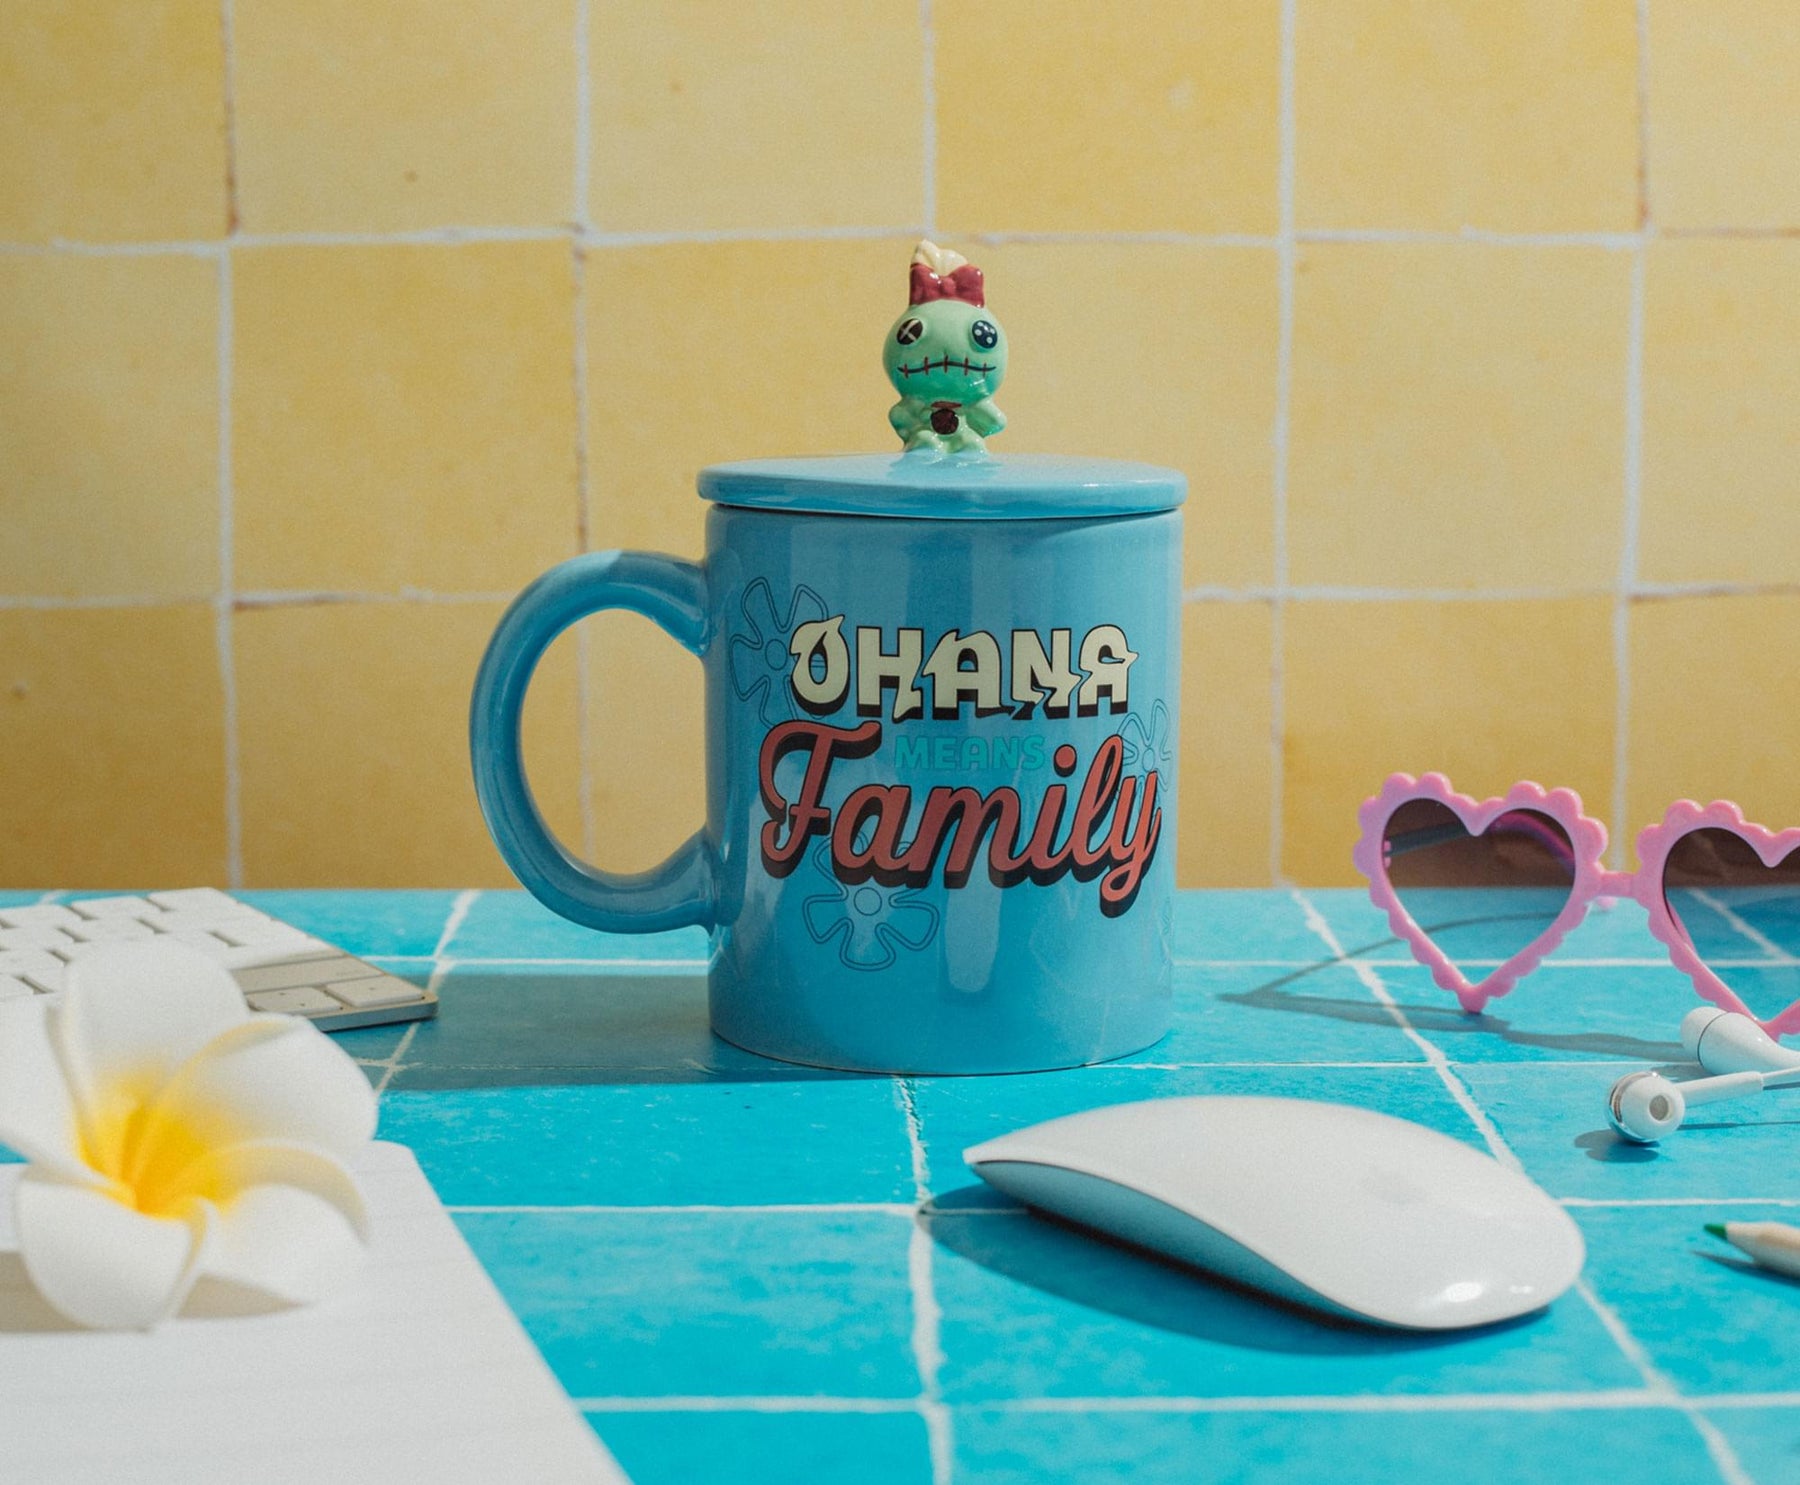 Disney Lilo & Stitch "Ohana Means Family" Ceramic Mug With Lid | Holds 18 Ounces